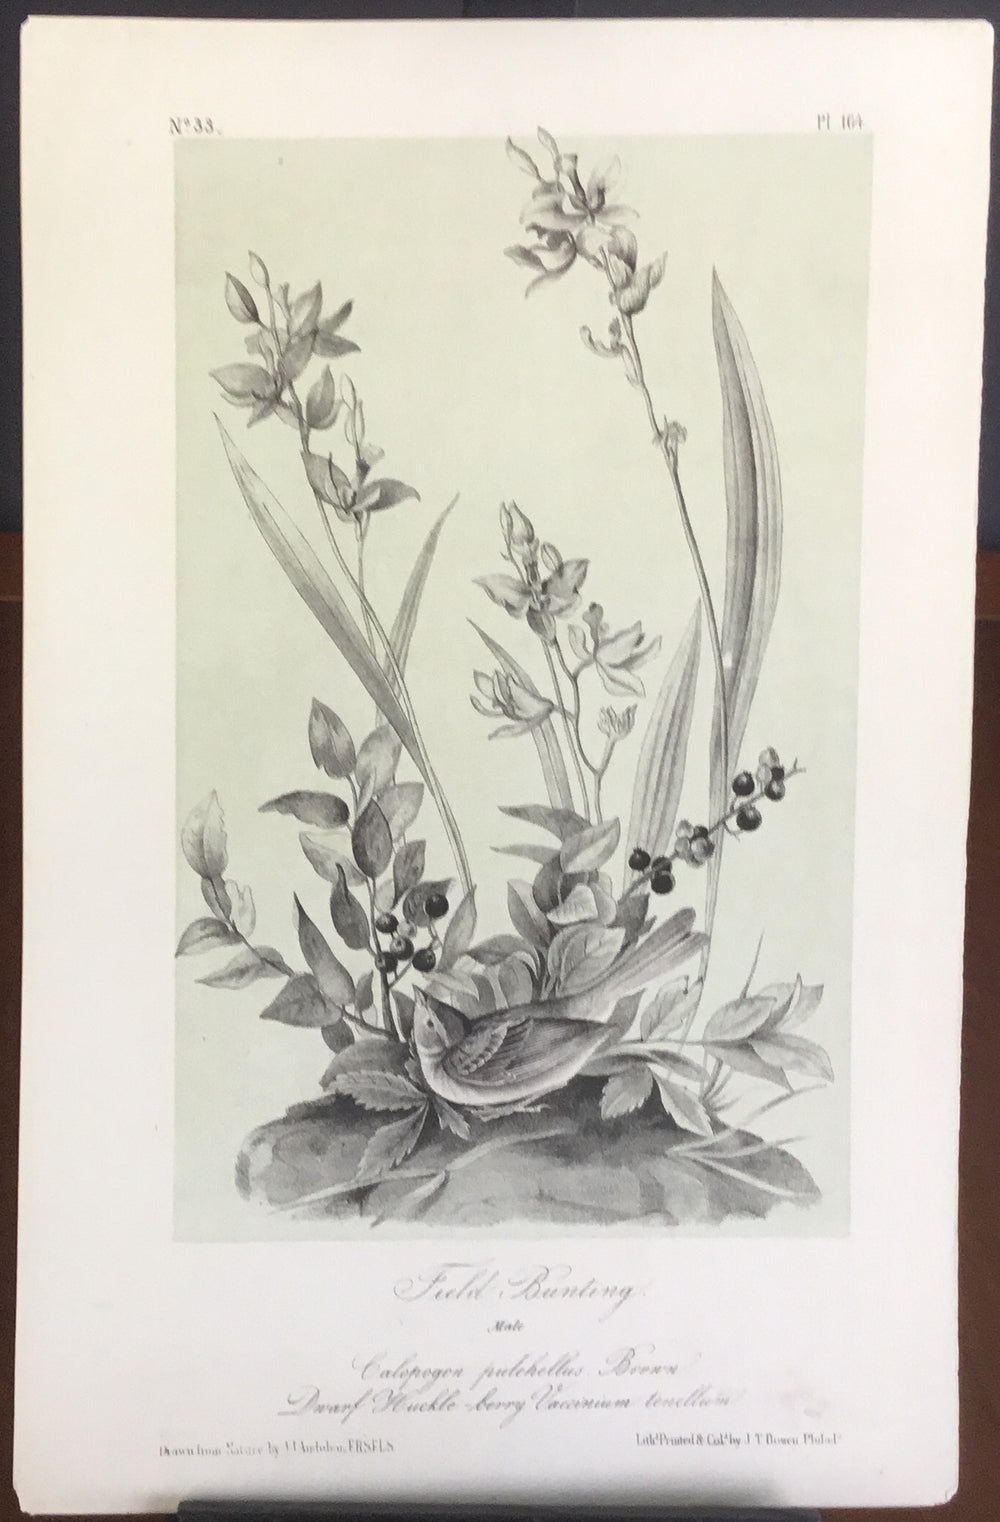 Audubon Octavo Field Bunting, plate 164, uncolored test sheet, 7 x 11